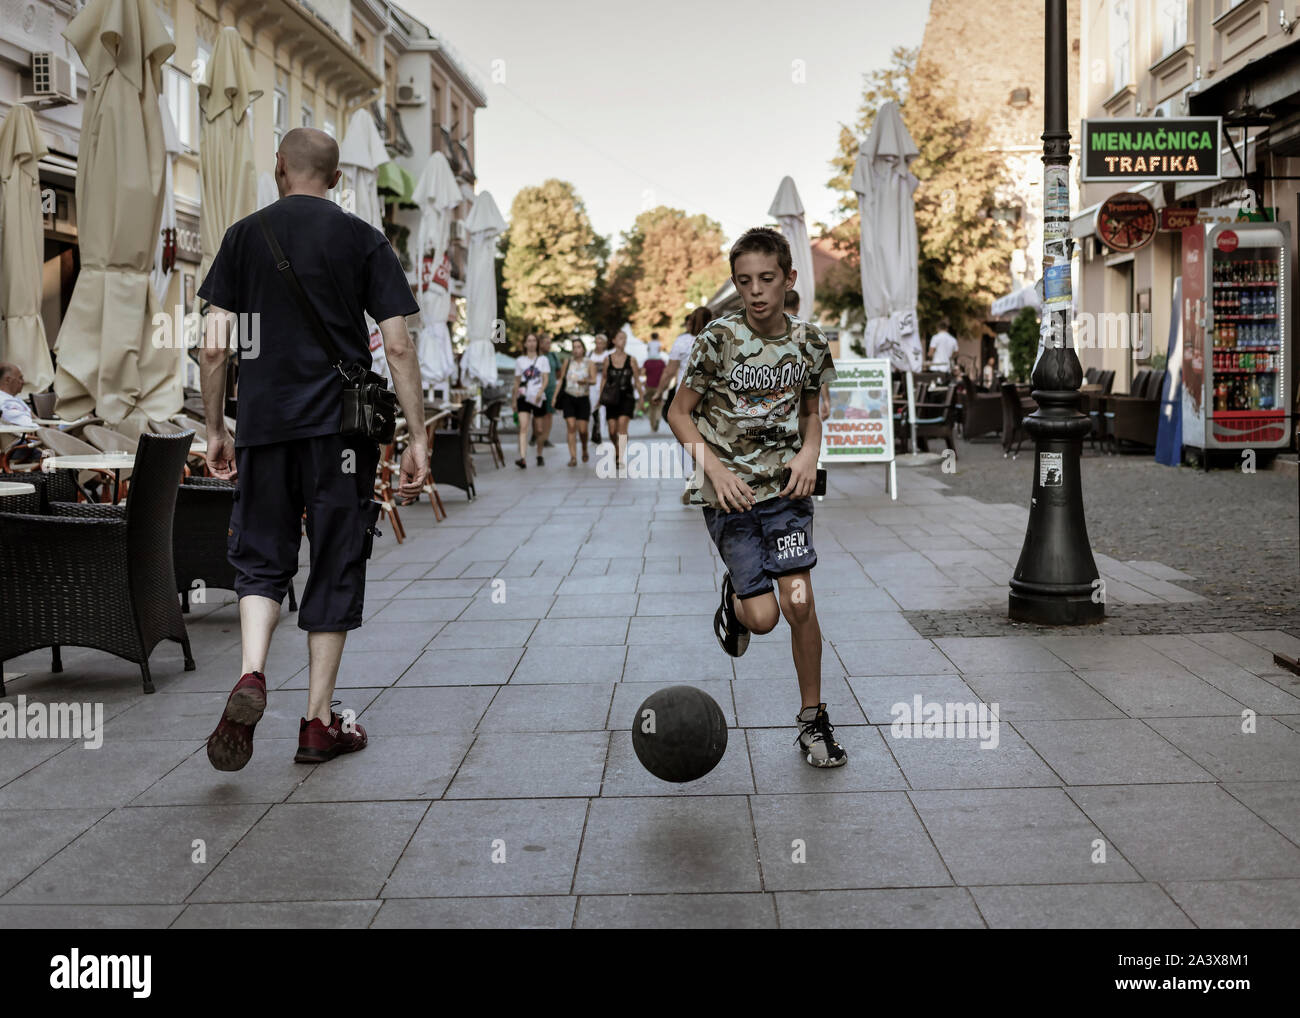 Belgrade, Serbia Aug 2, 2019: Urban scene with a boy leading a ball down the street Stock Photo